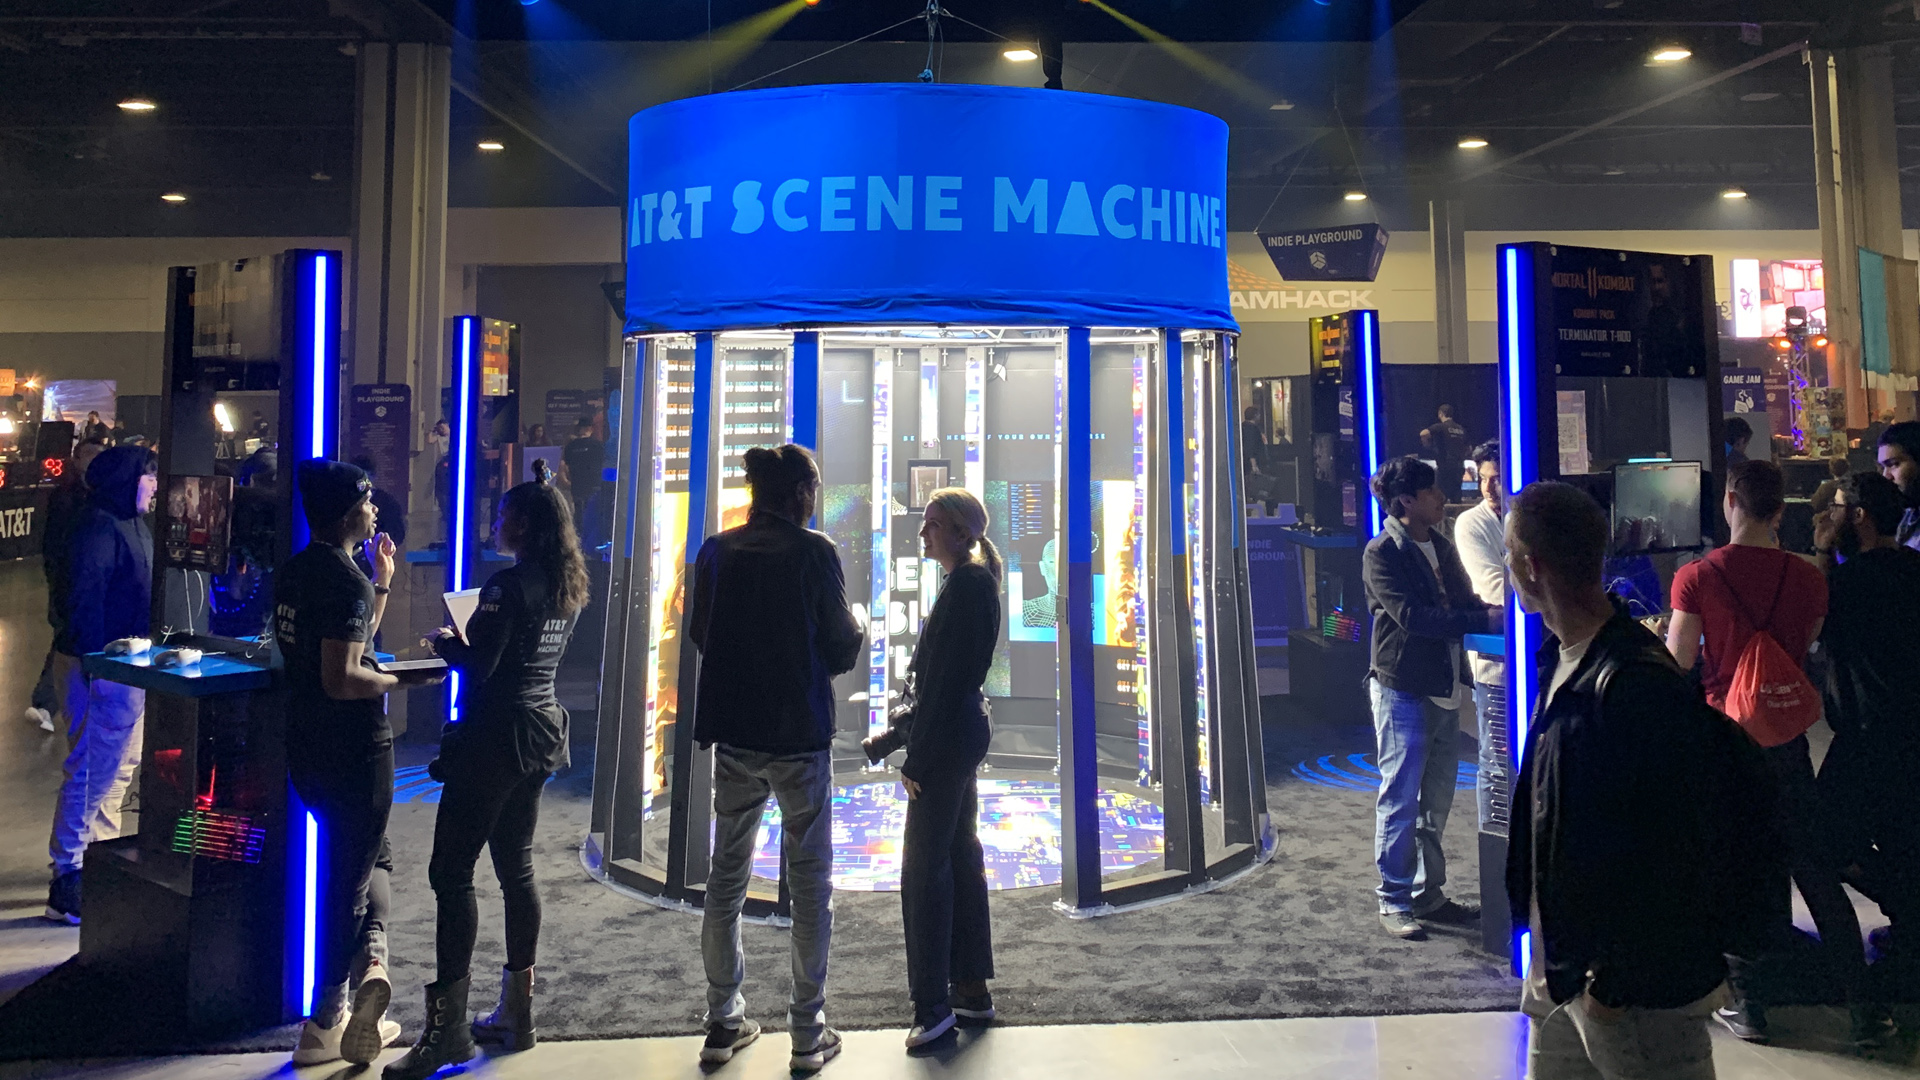 AT&T Scene Machine